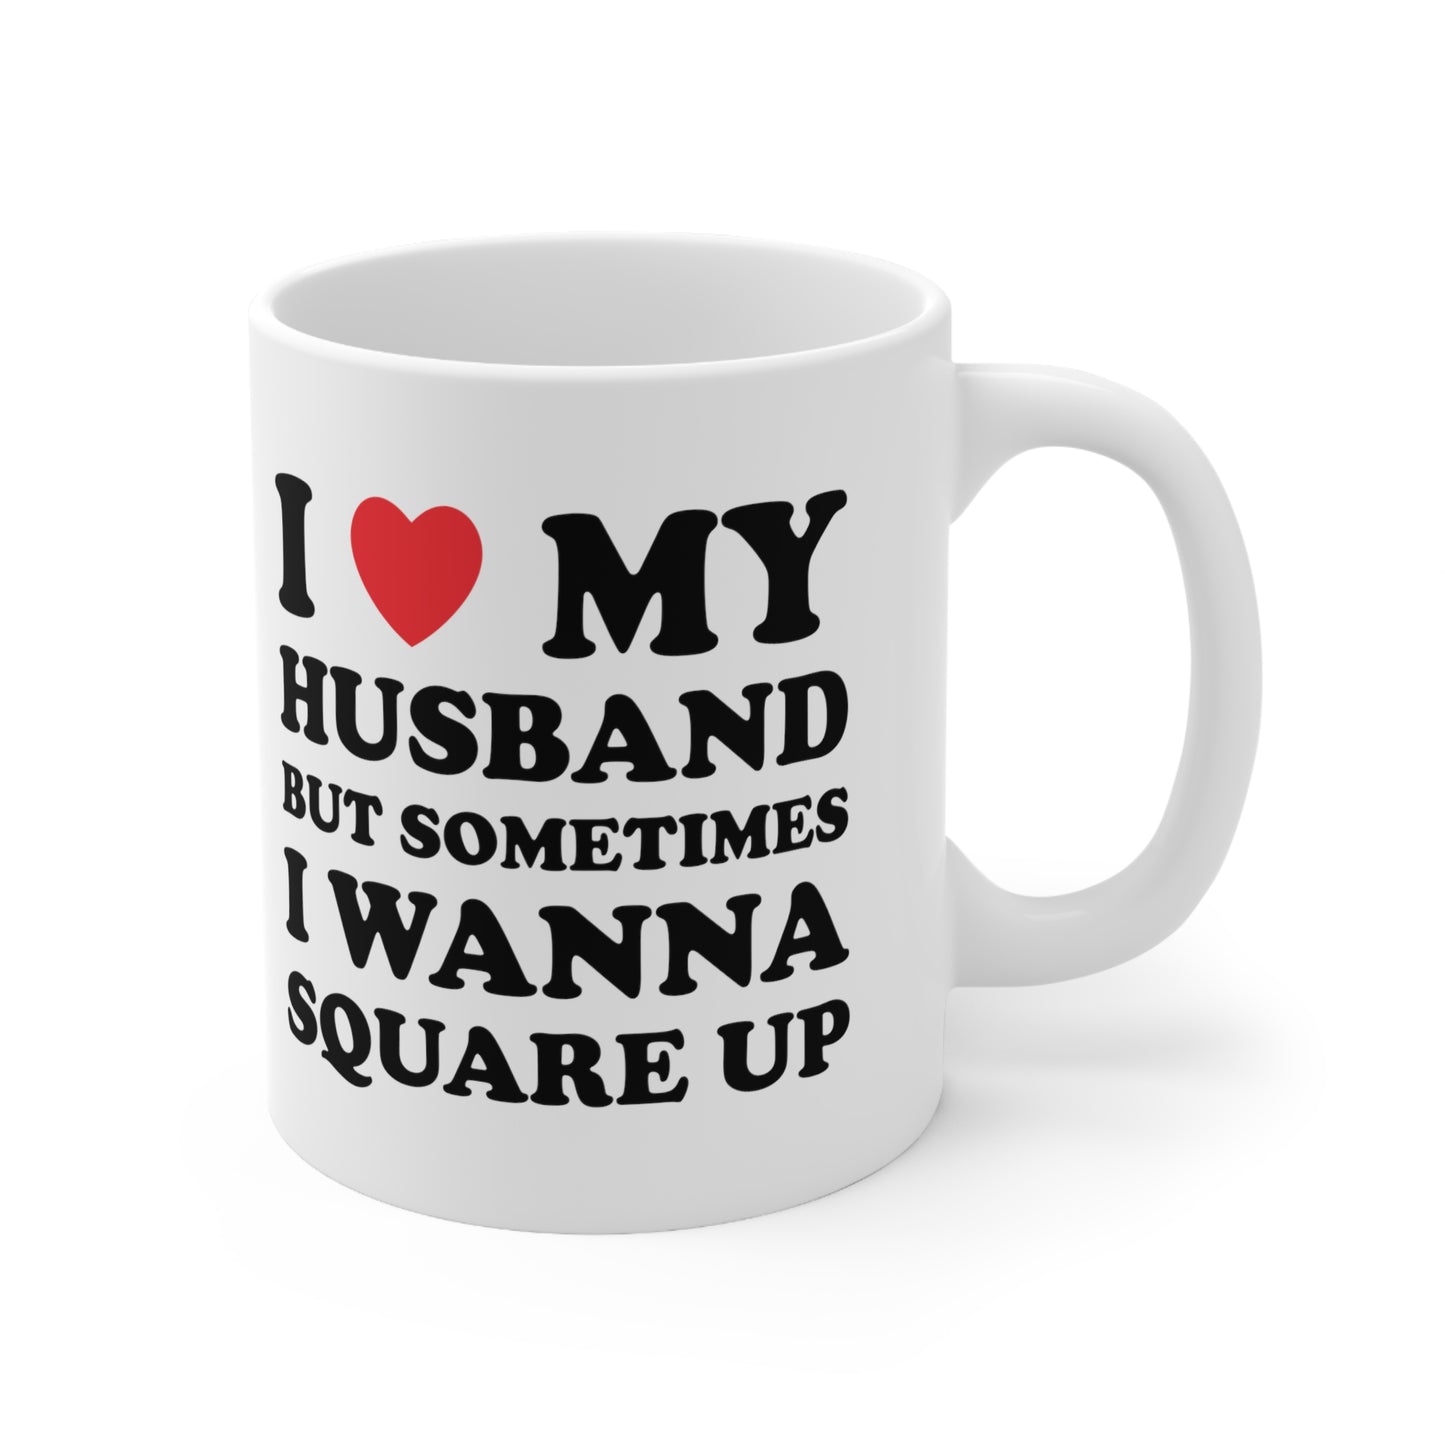 I Love My Hot Husband But Sometimes I Wanna Square Up Ceramic Mug 11oz